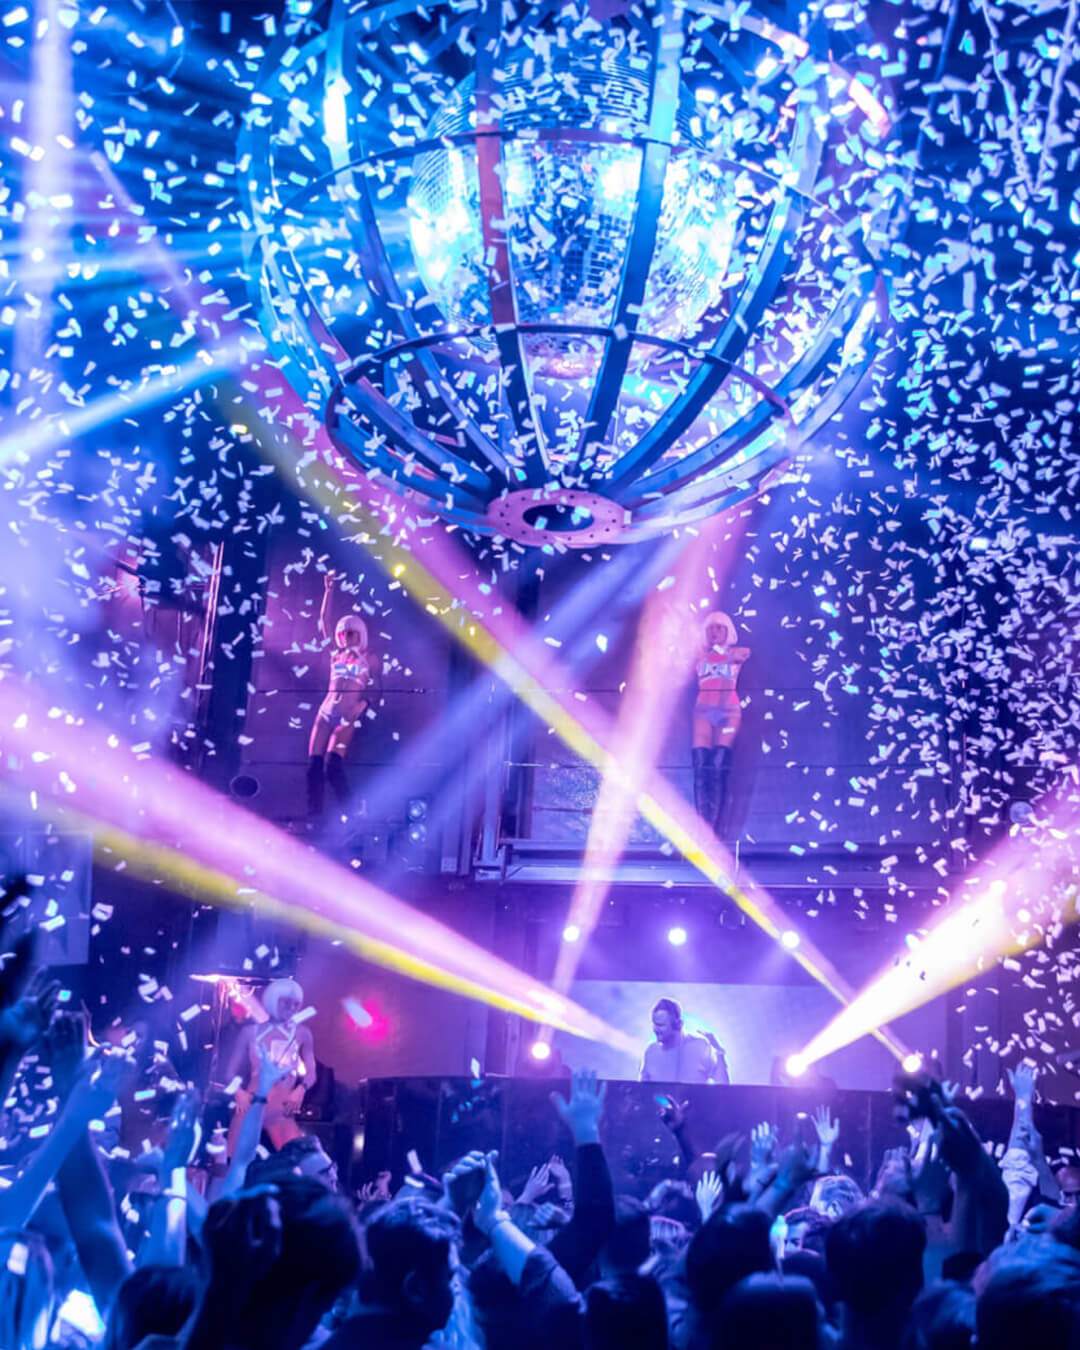 Marquee Nightclub at Cosmopolitan – Events & FAQ – Vegas Nightclub